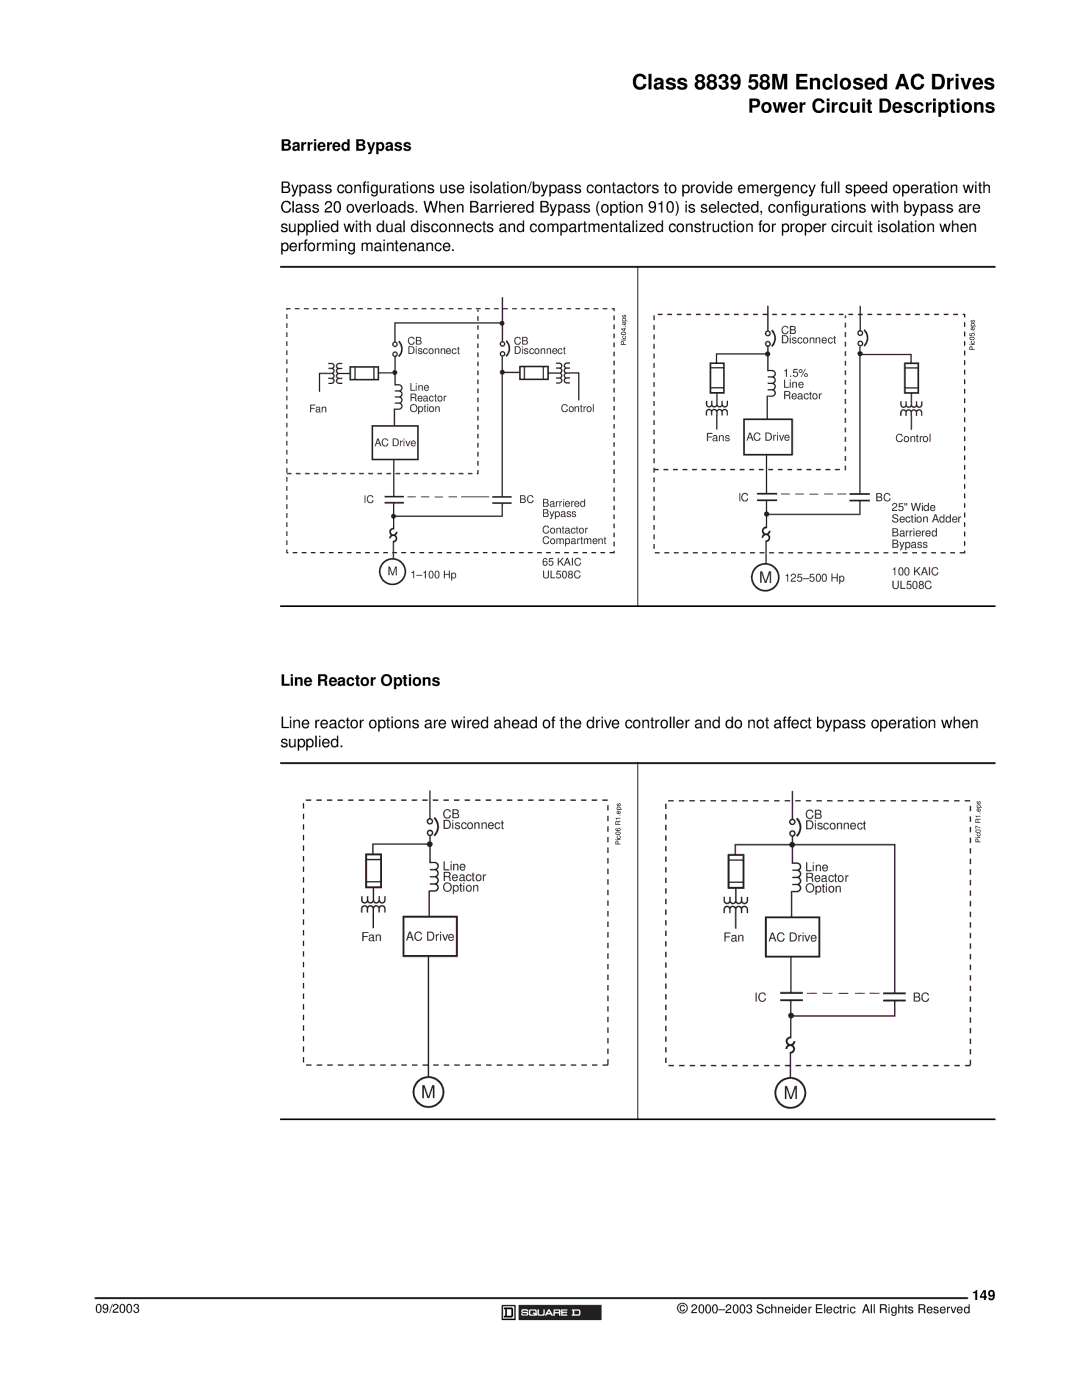 Schneider Electric 58 TRX manual Barriered Bypass, Line Reactor Options, 149 